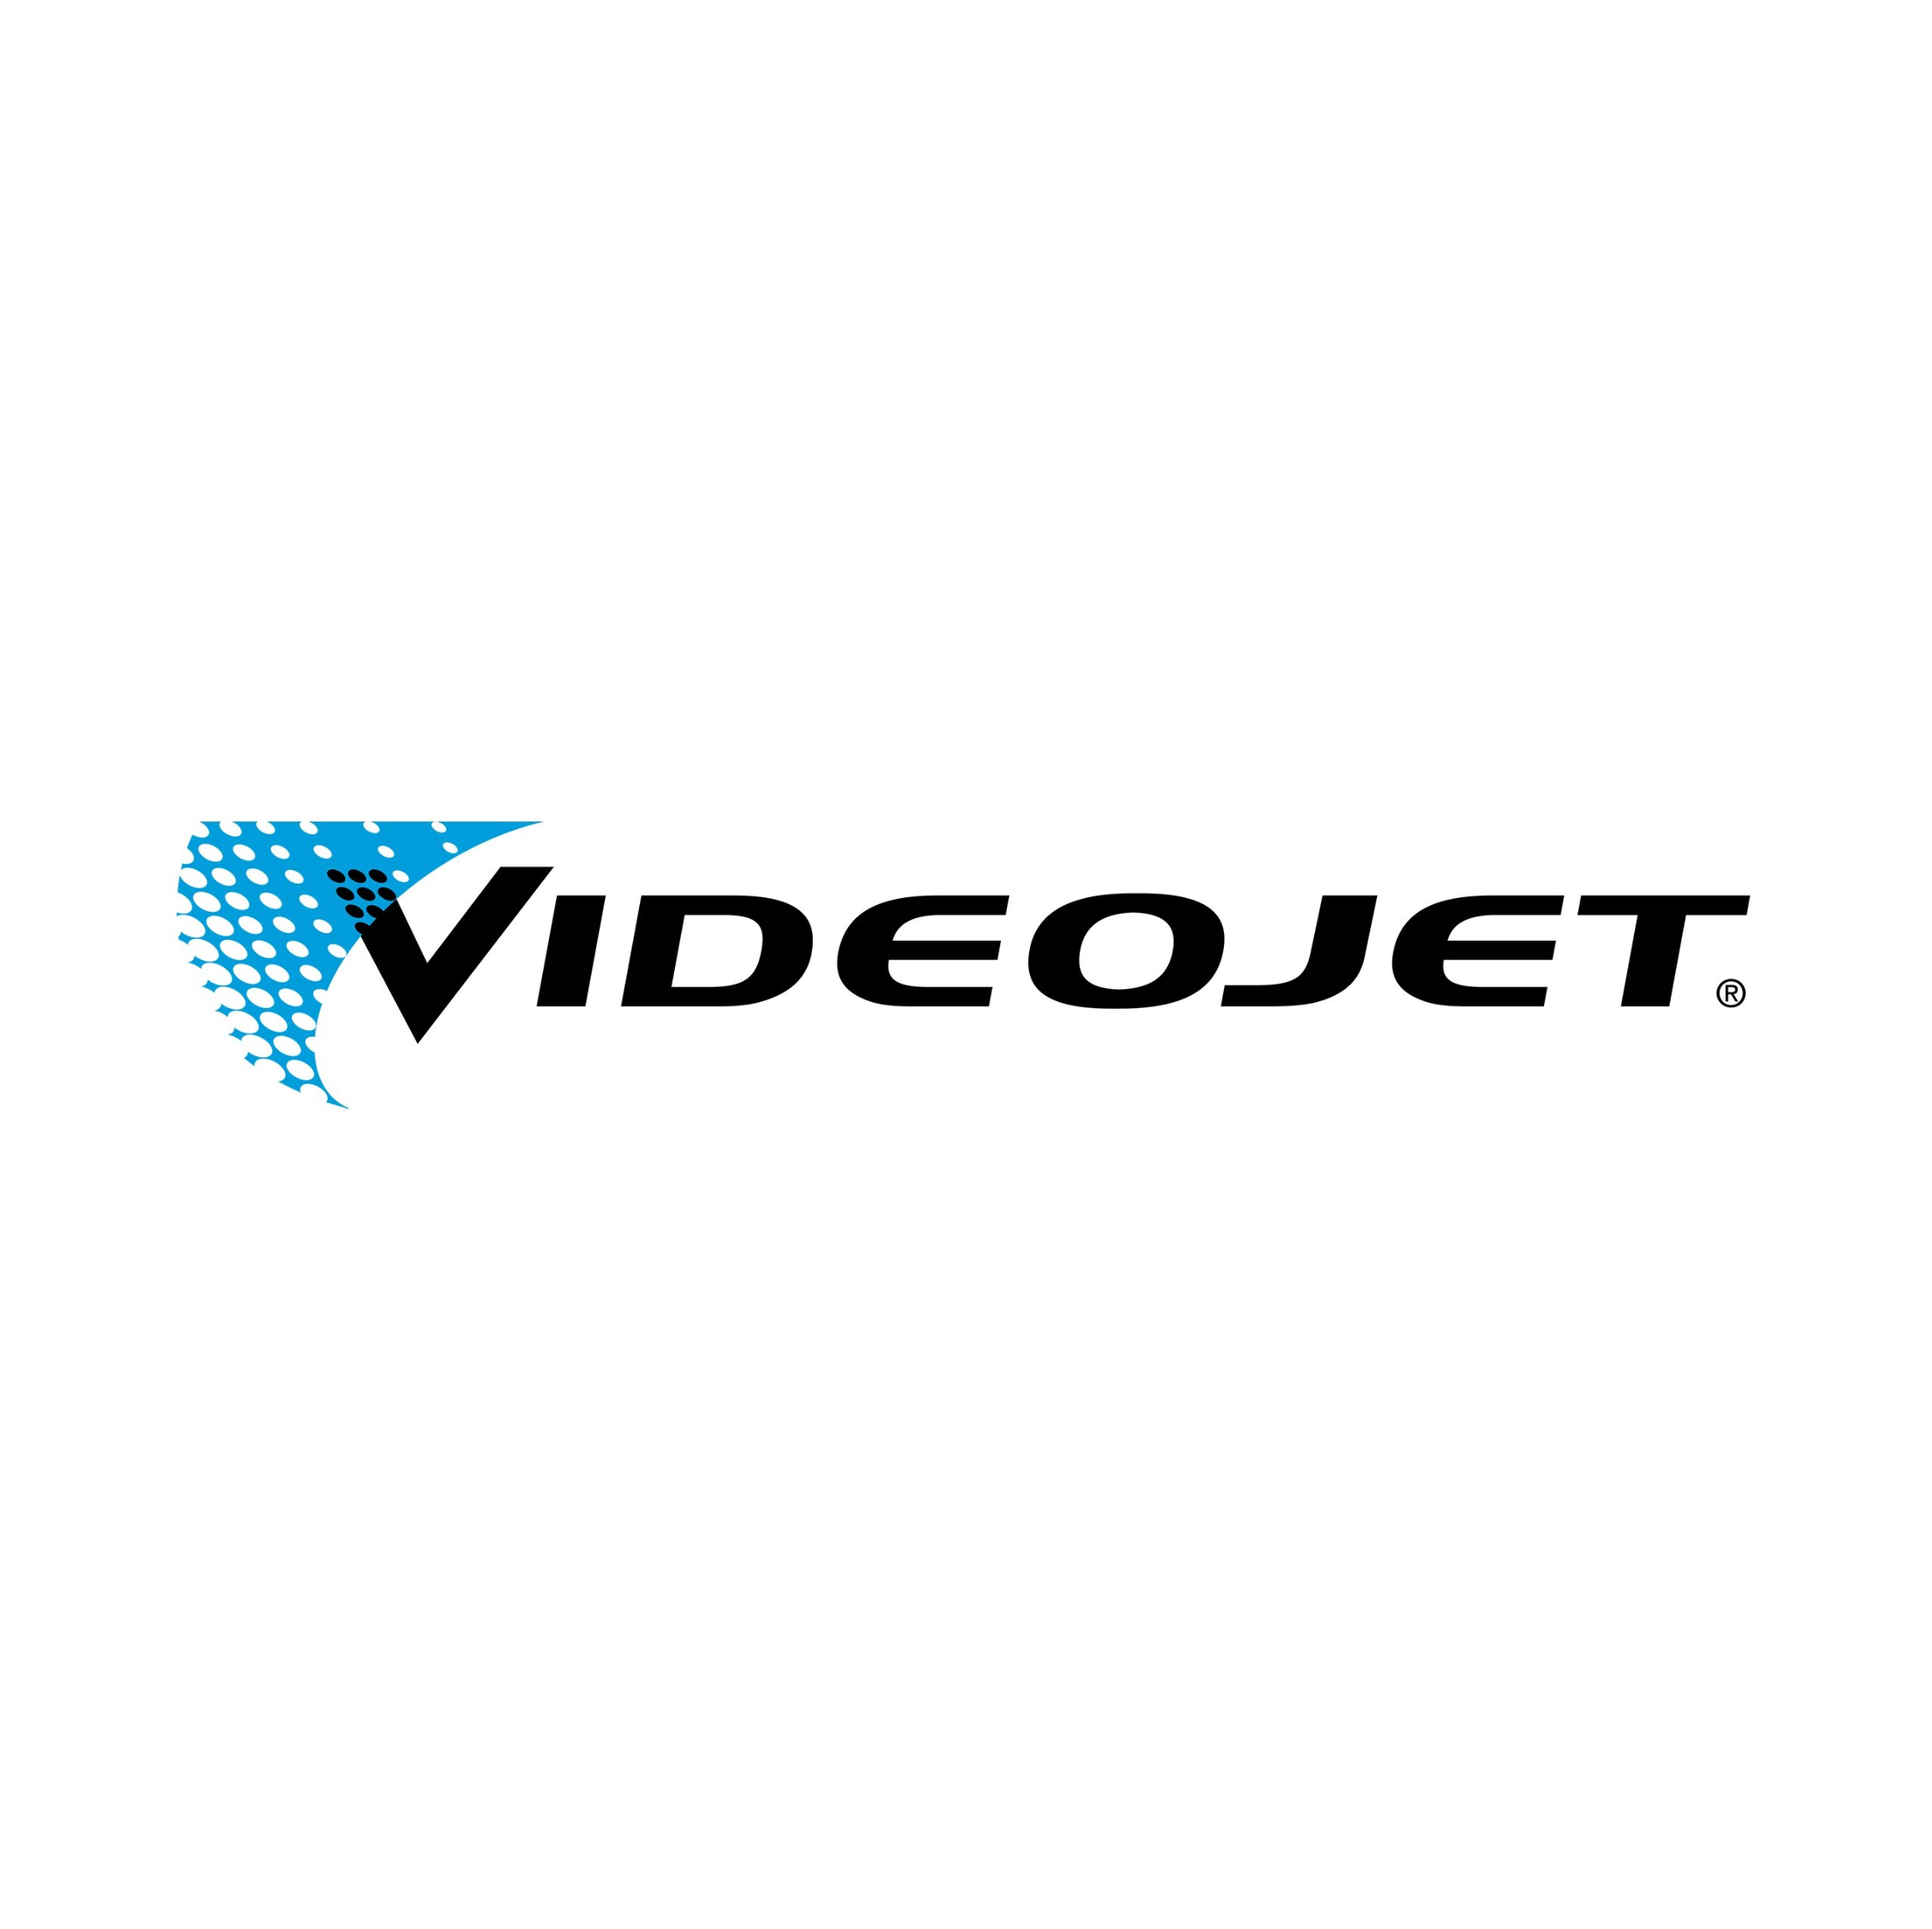 Videojet Logo